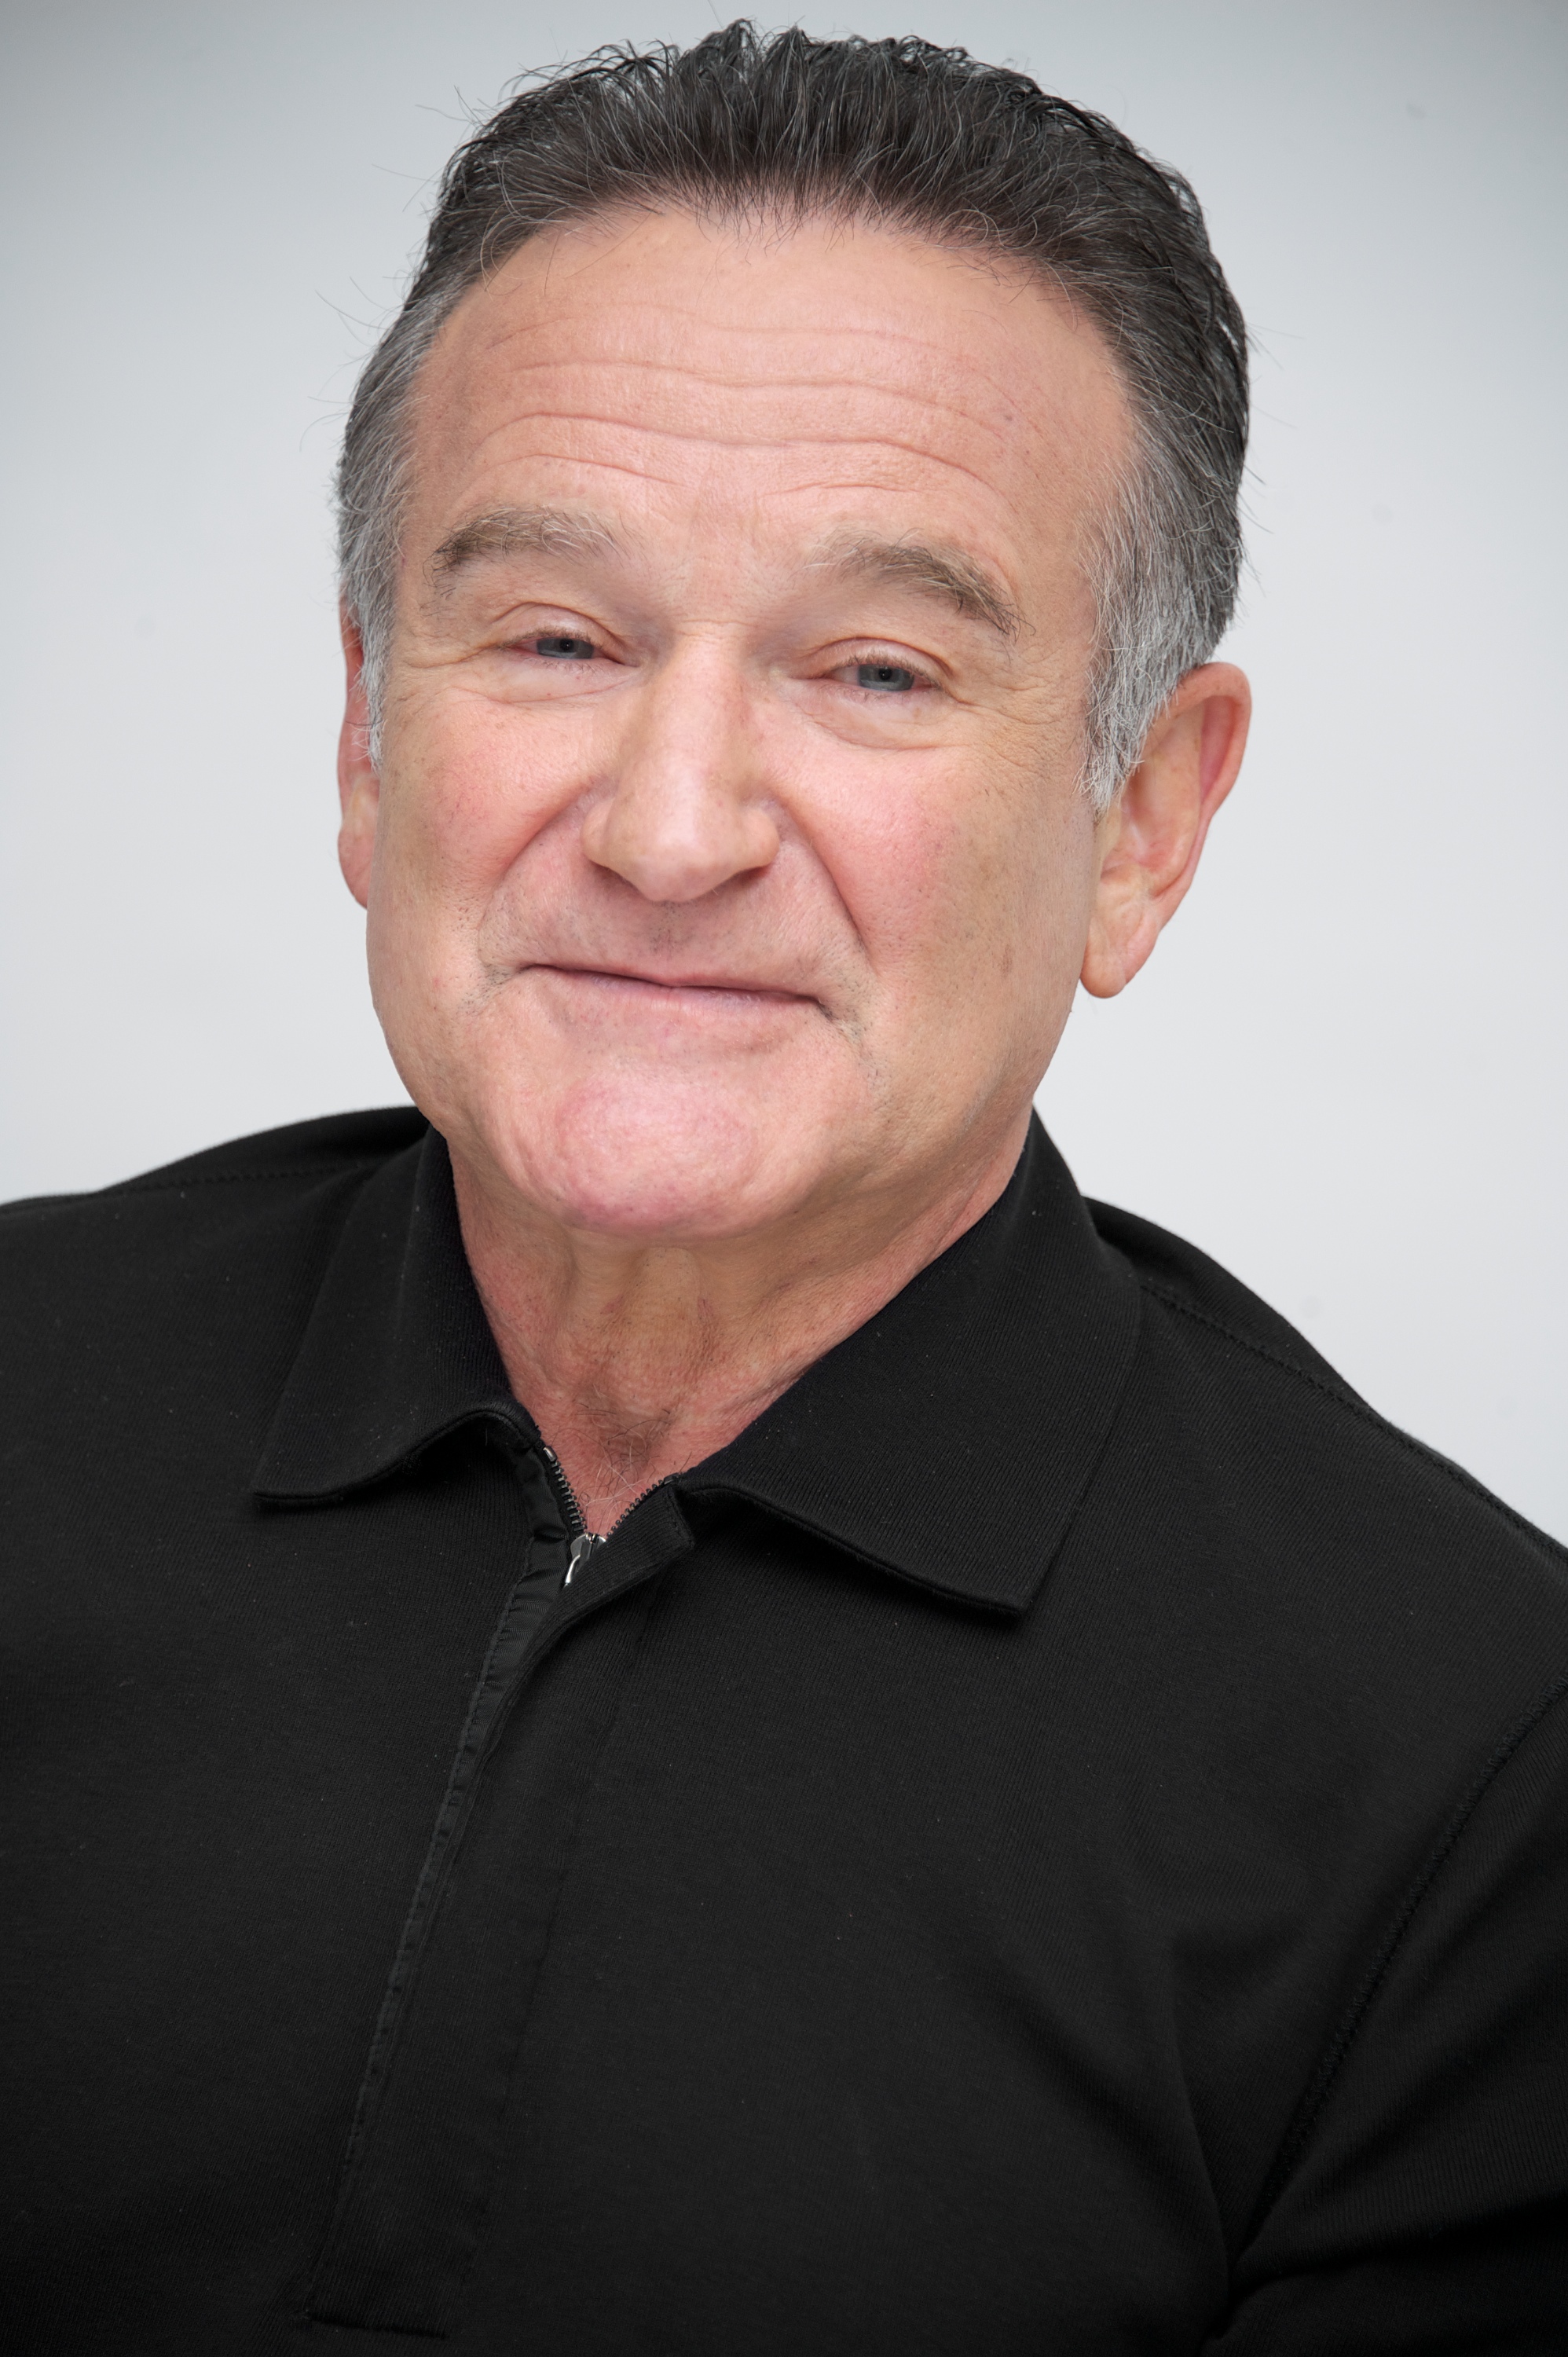 Robin Williams en Californie en 2013 | Source : Getty Images